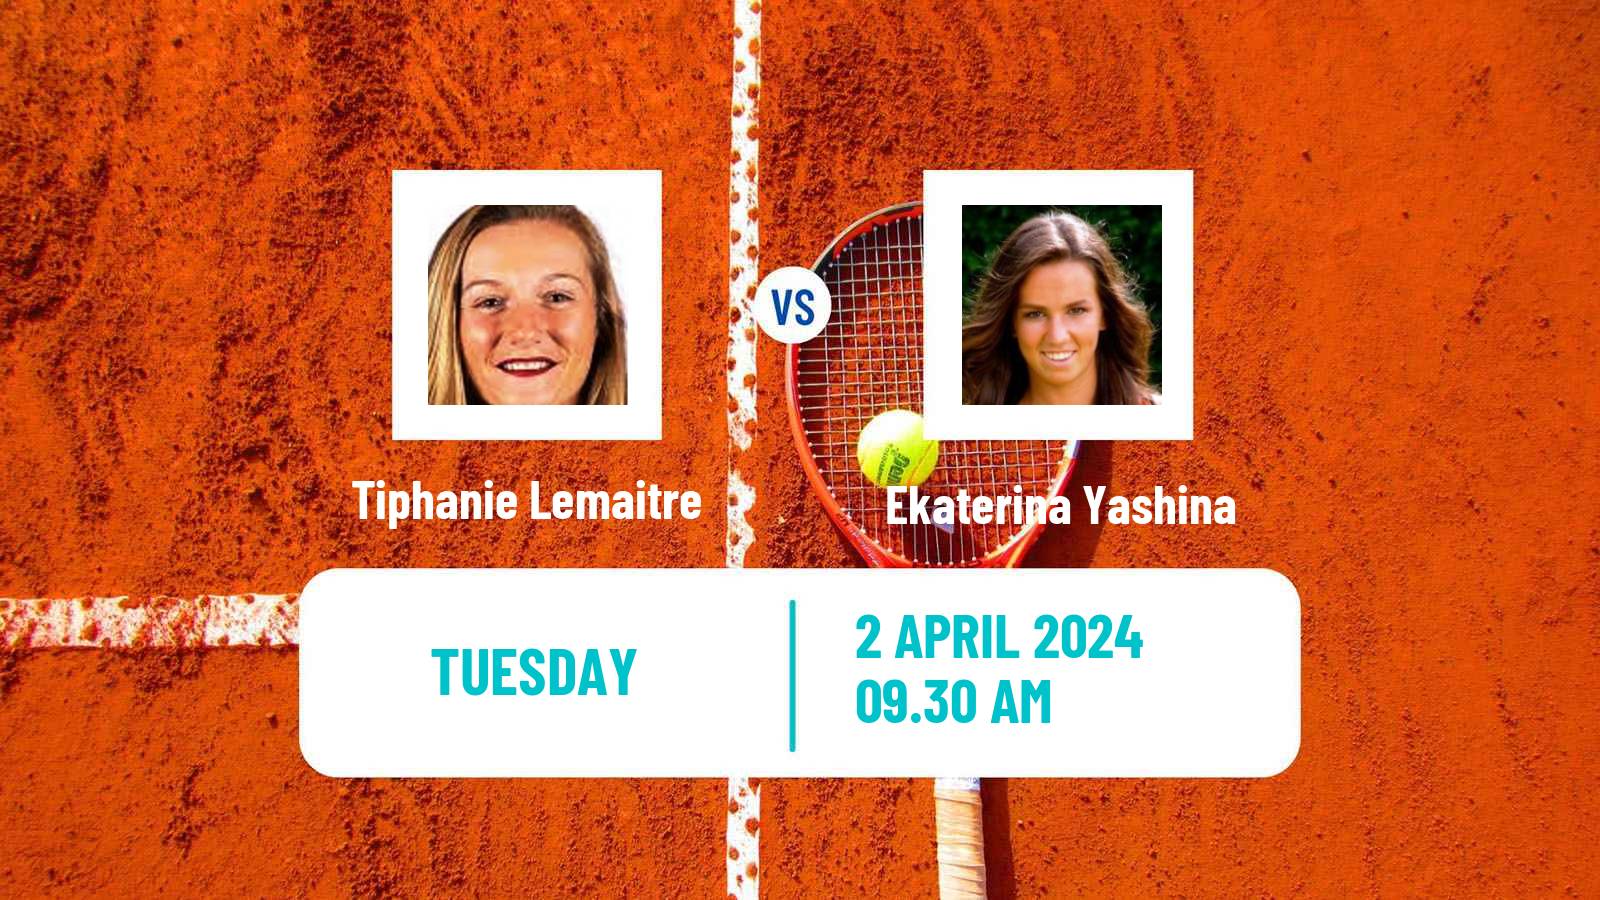 Tennis ITF W35 Hammamet 3 Women Tiphanie Lemaitre - Ekaterina Yashina